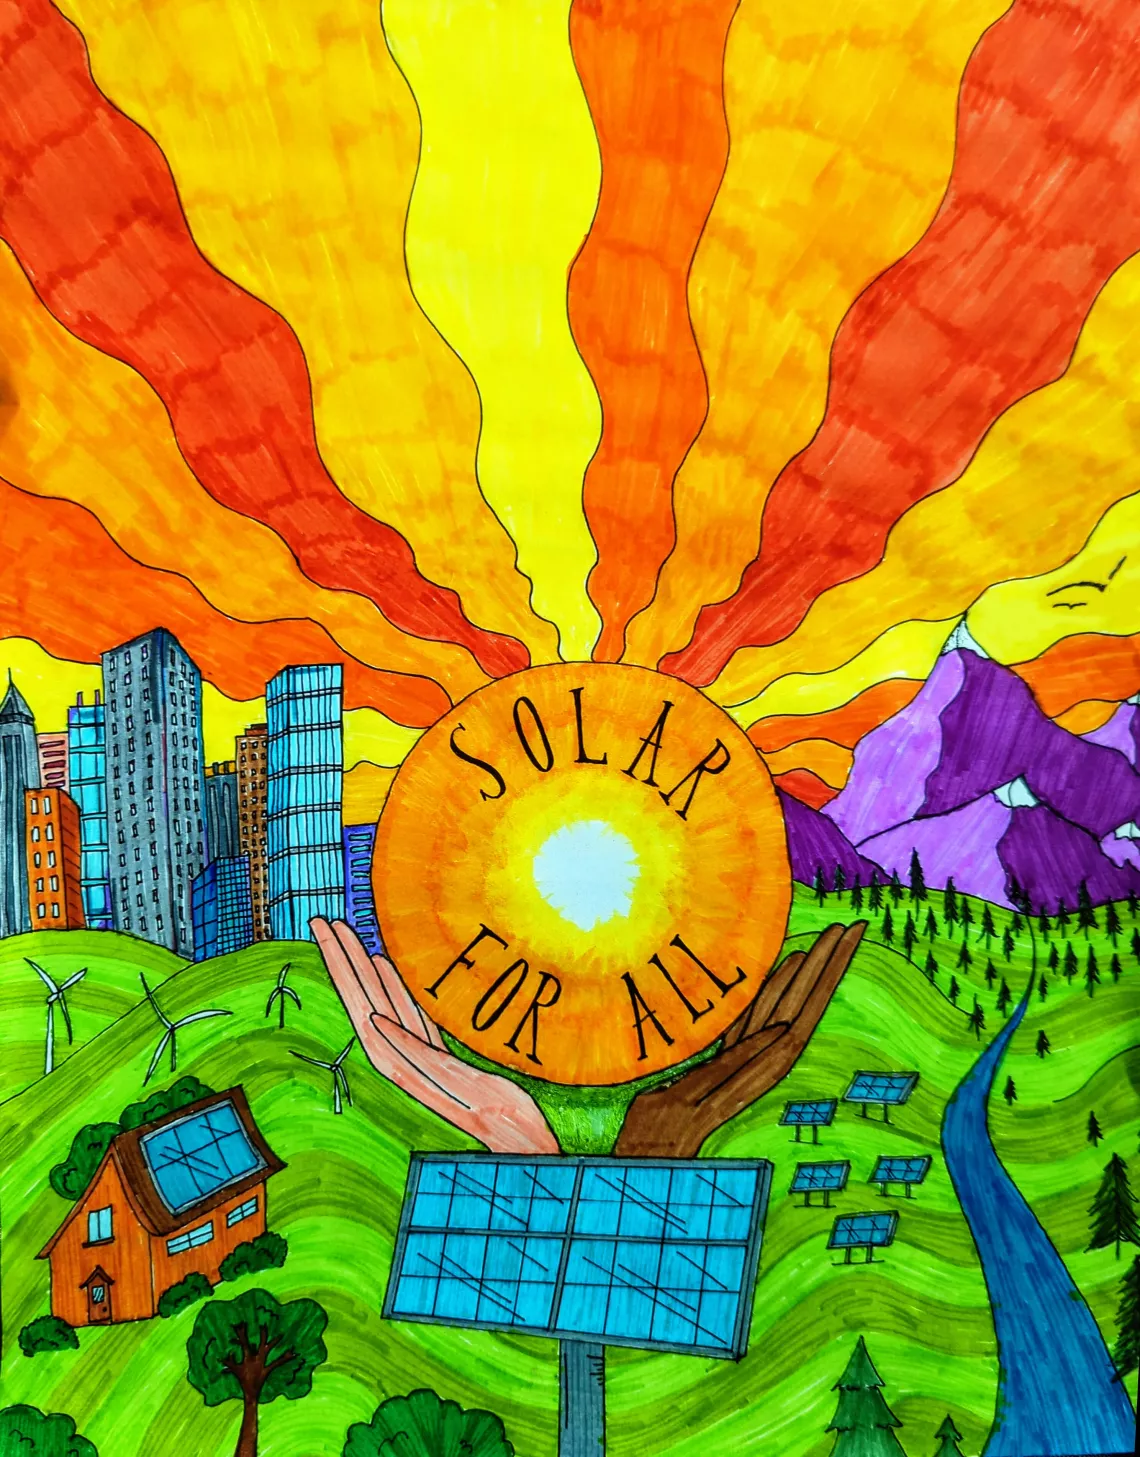 Solar For All illustration